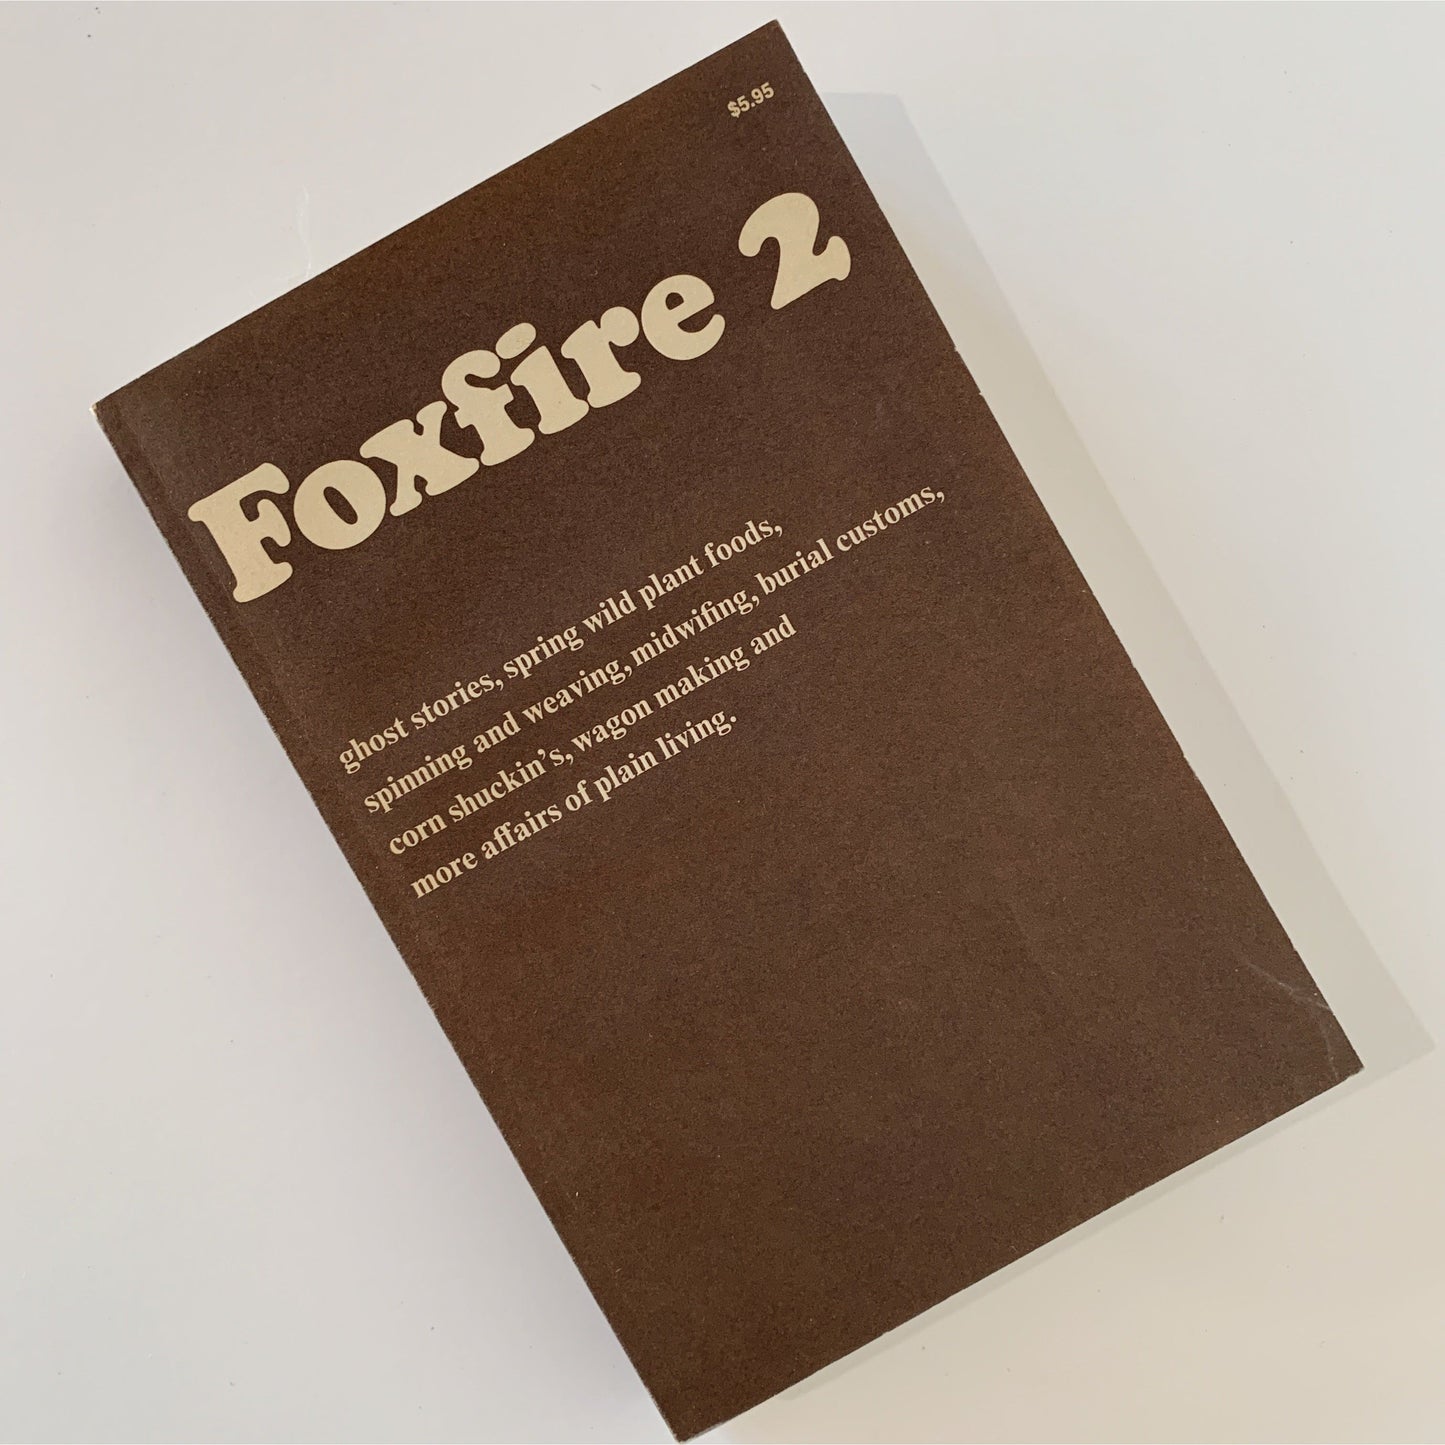 Foxfire 2, 1973, Paperback, Homesteading Guide